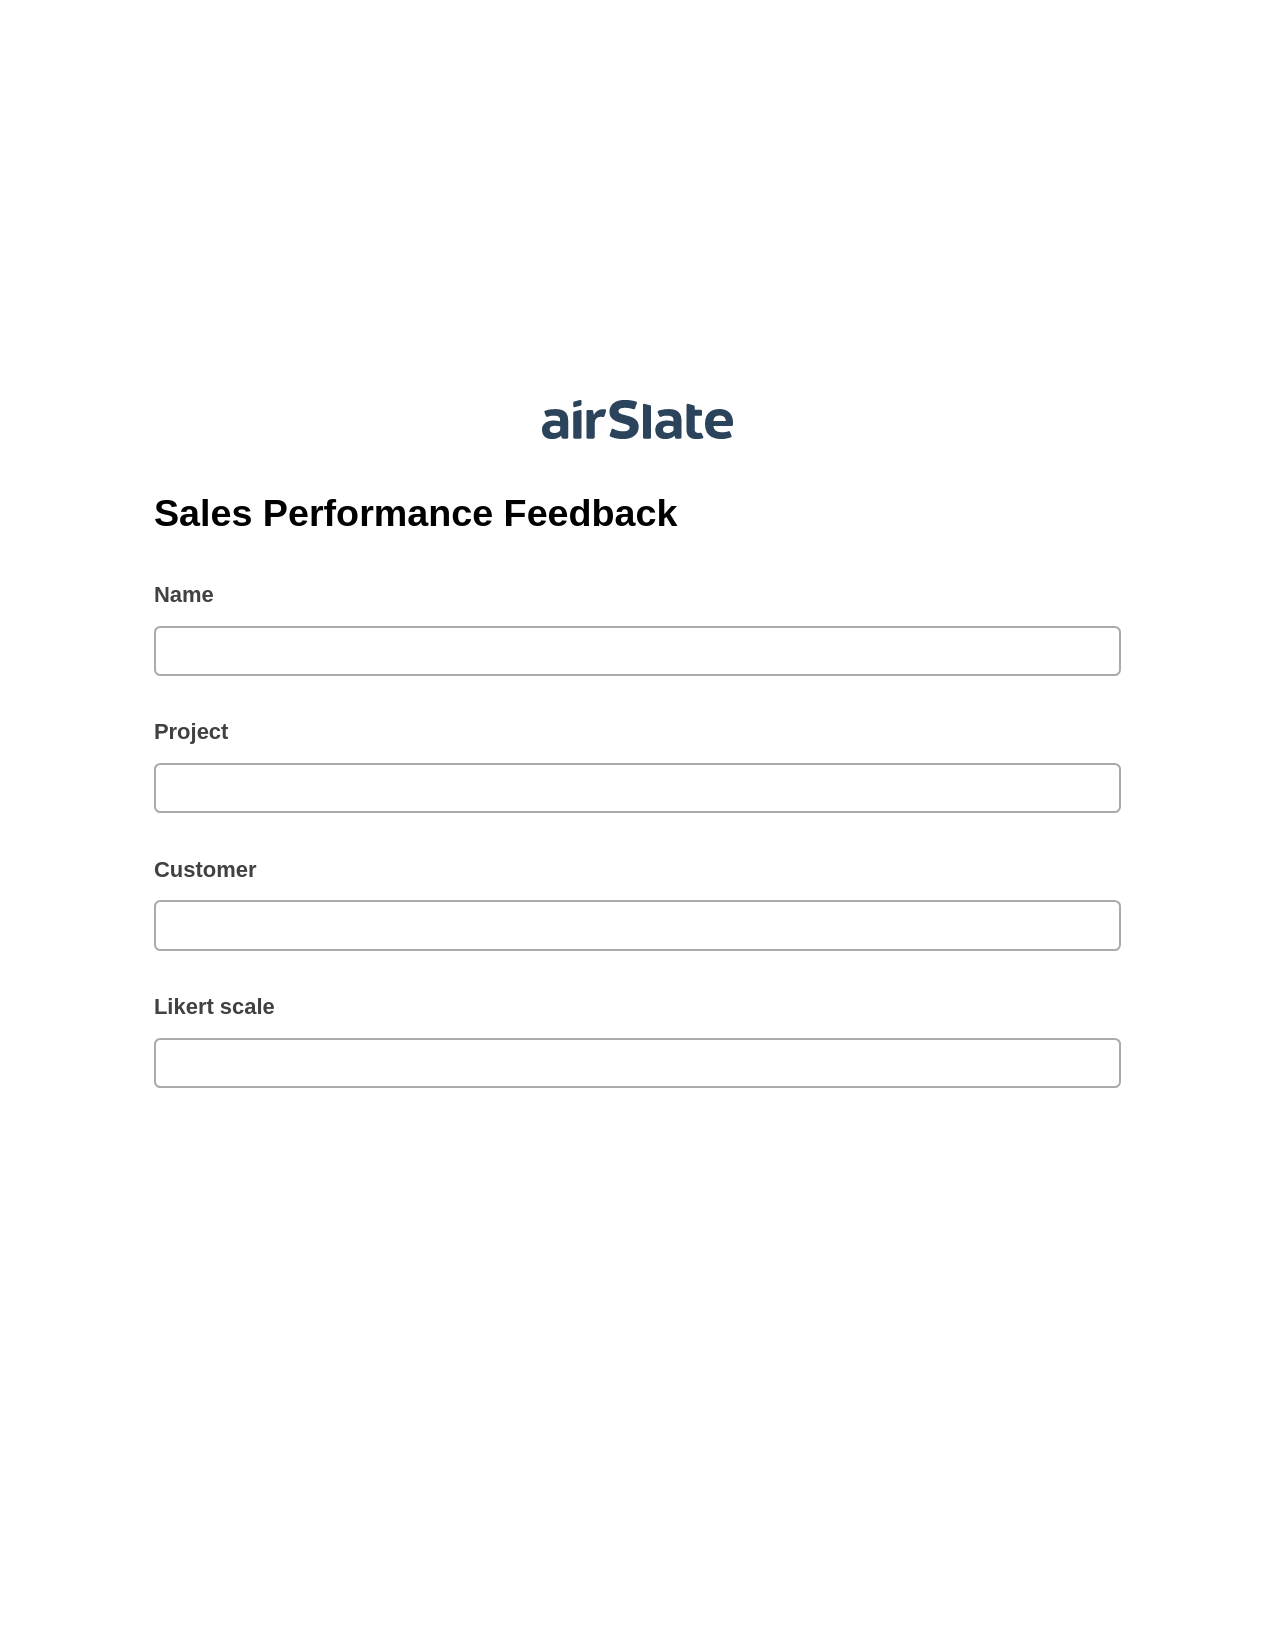 Sales Performance Feedback Pre-fill from Salesforce Record Bot, Invoke Salesforce Process Bot, Export to MySQL Bot